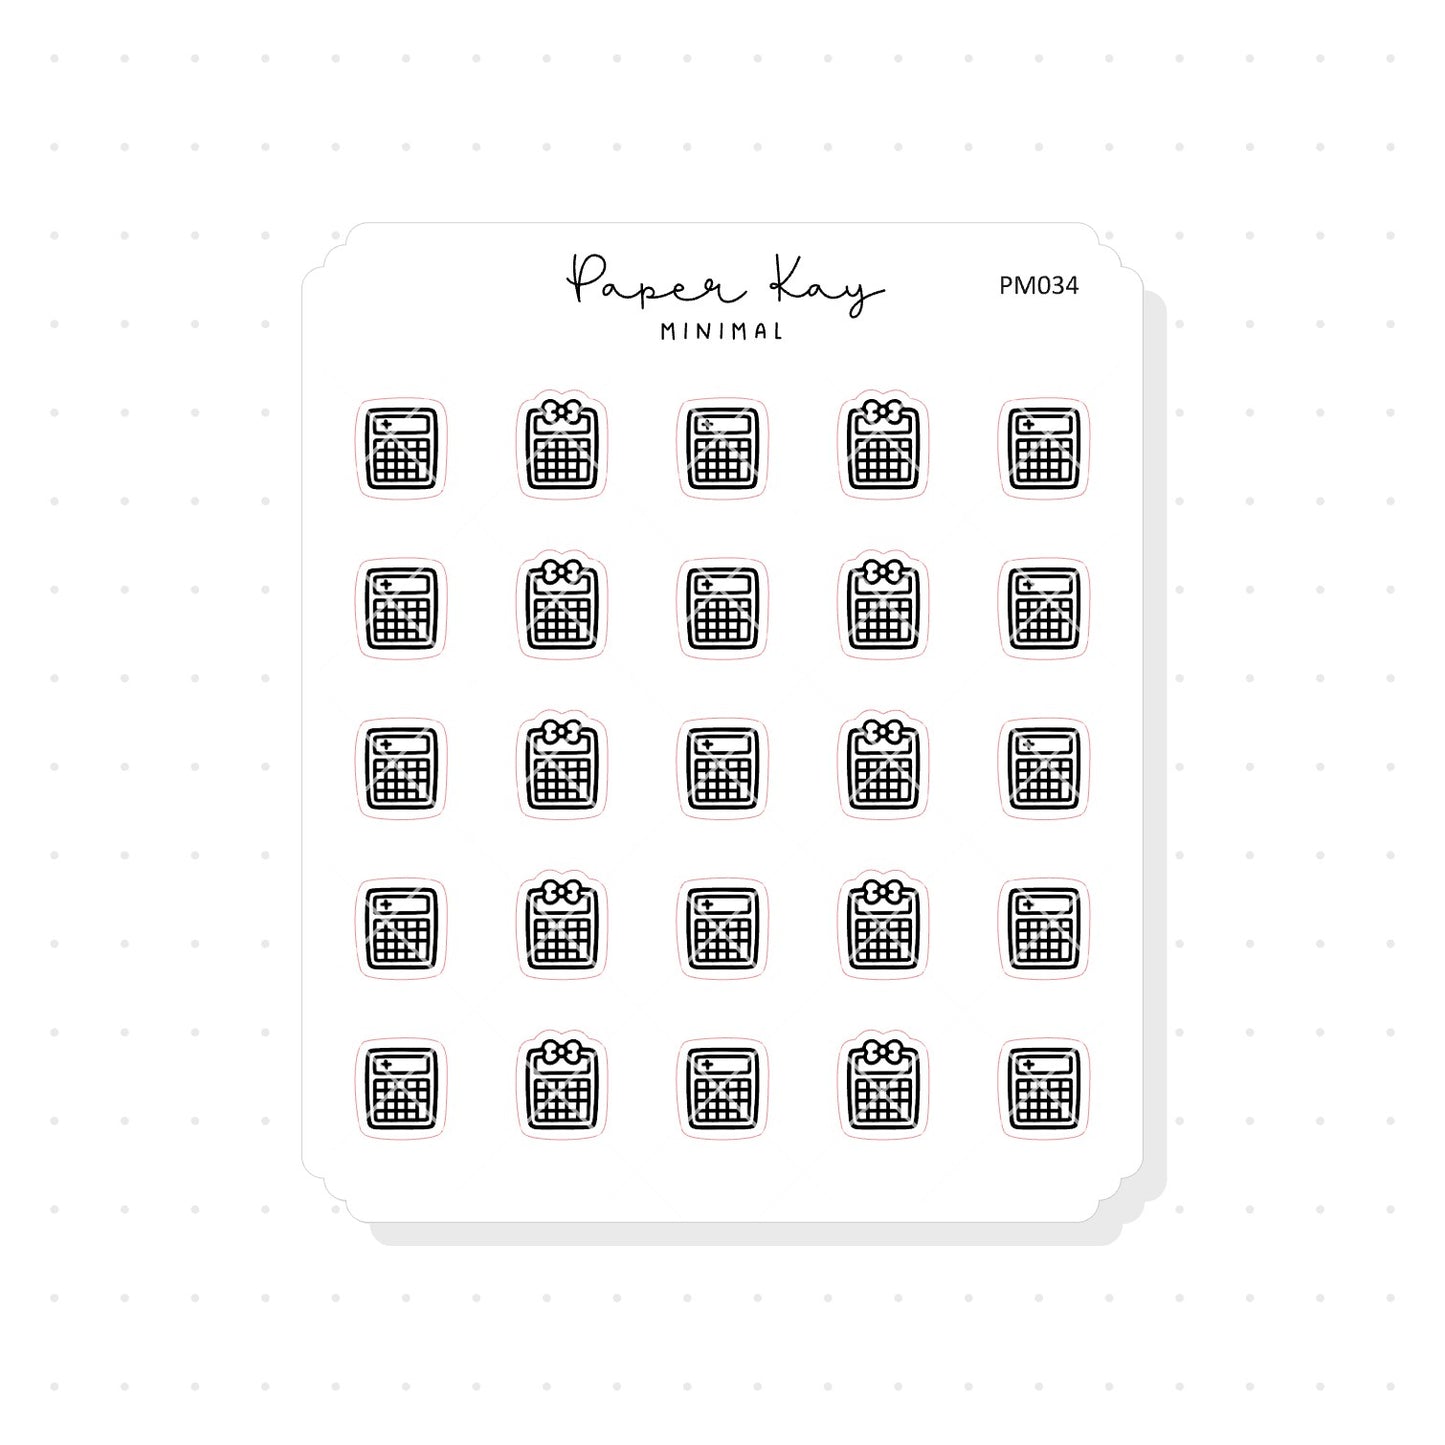 (PM034) Calculator - Tiny Minimal Icon Stickers